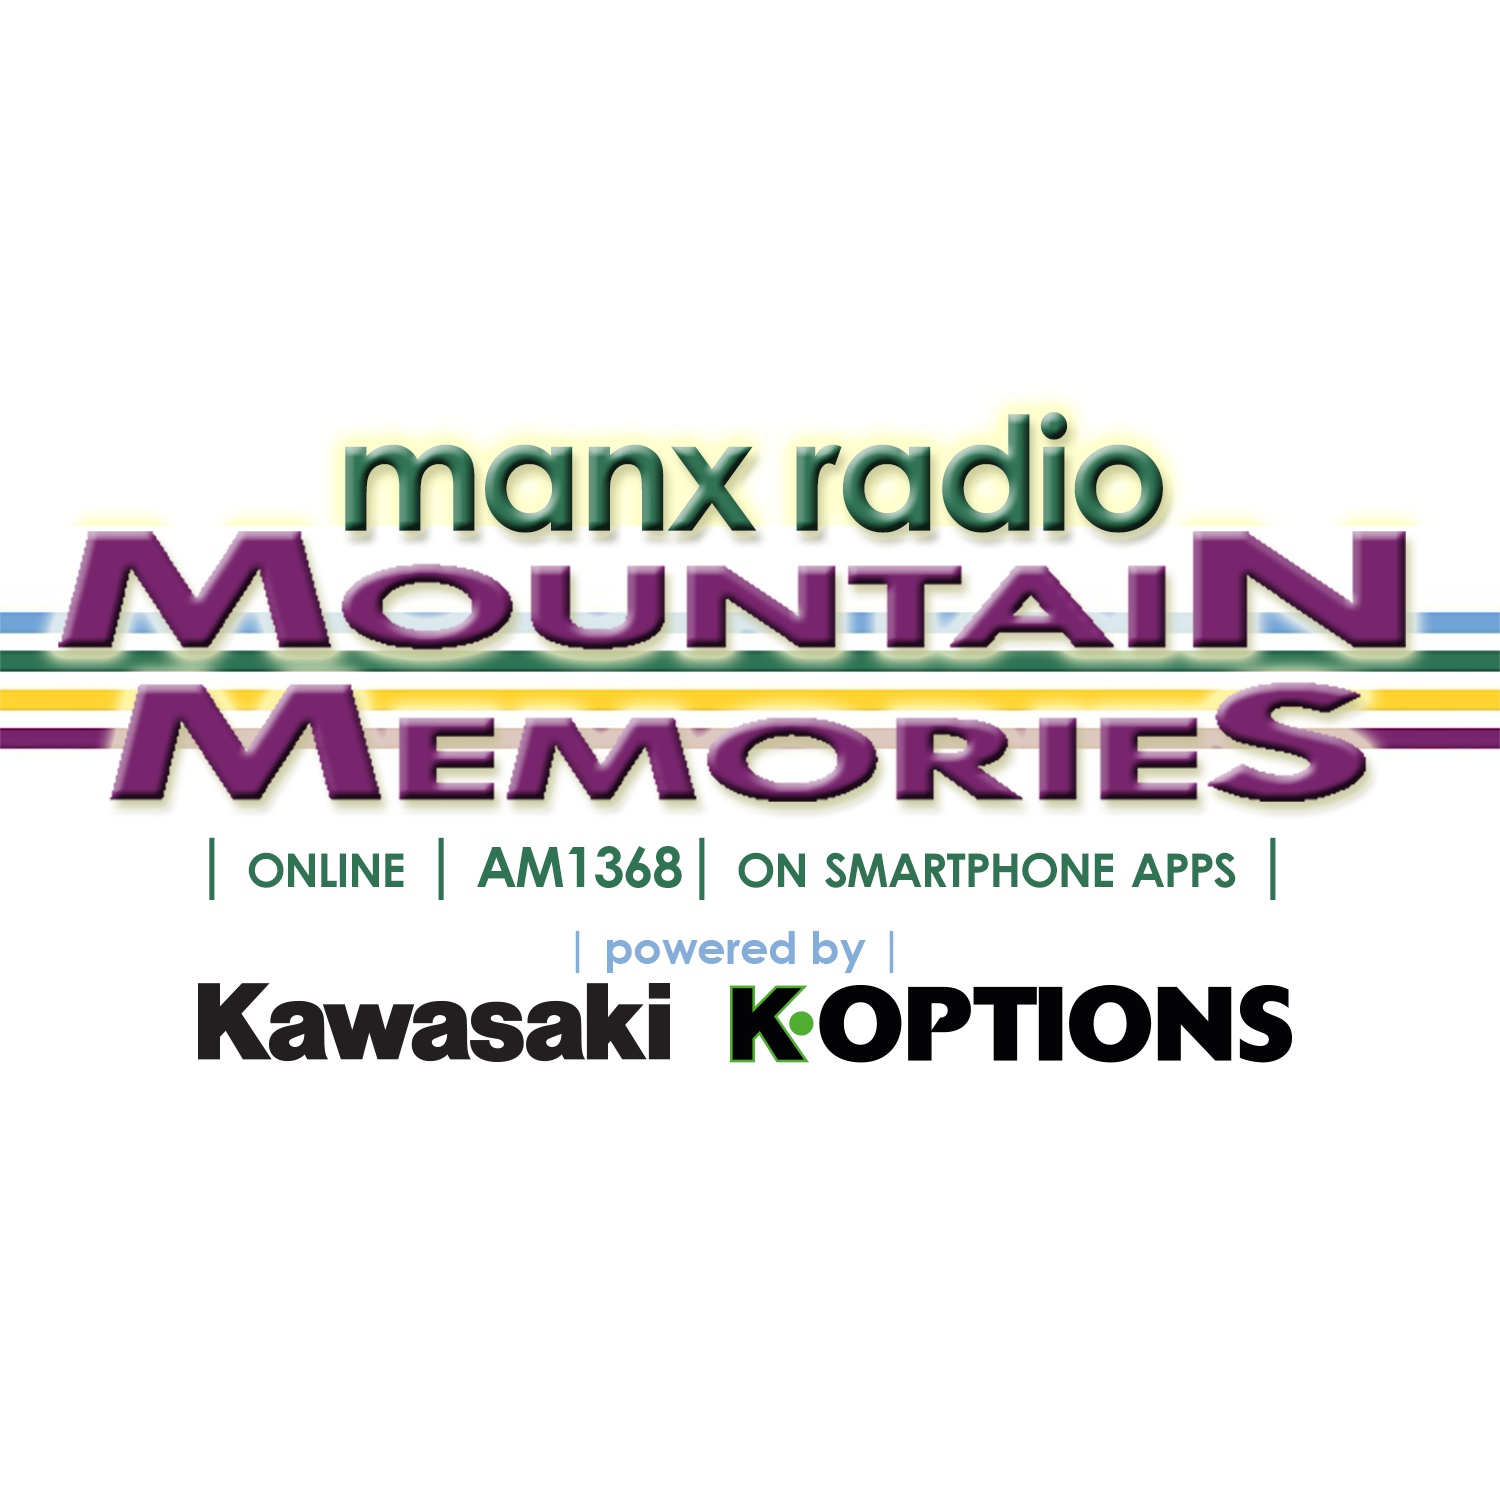 Manx Radio's Mountain Memories